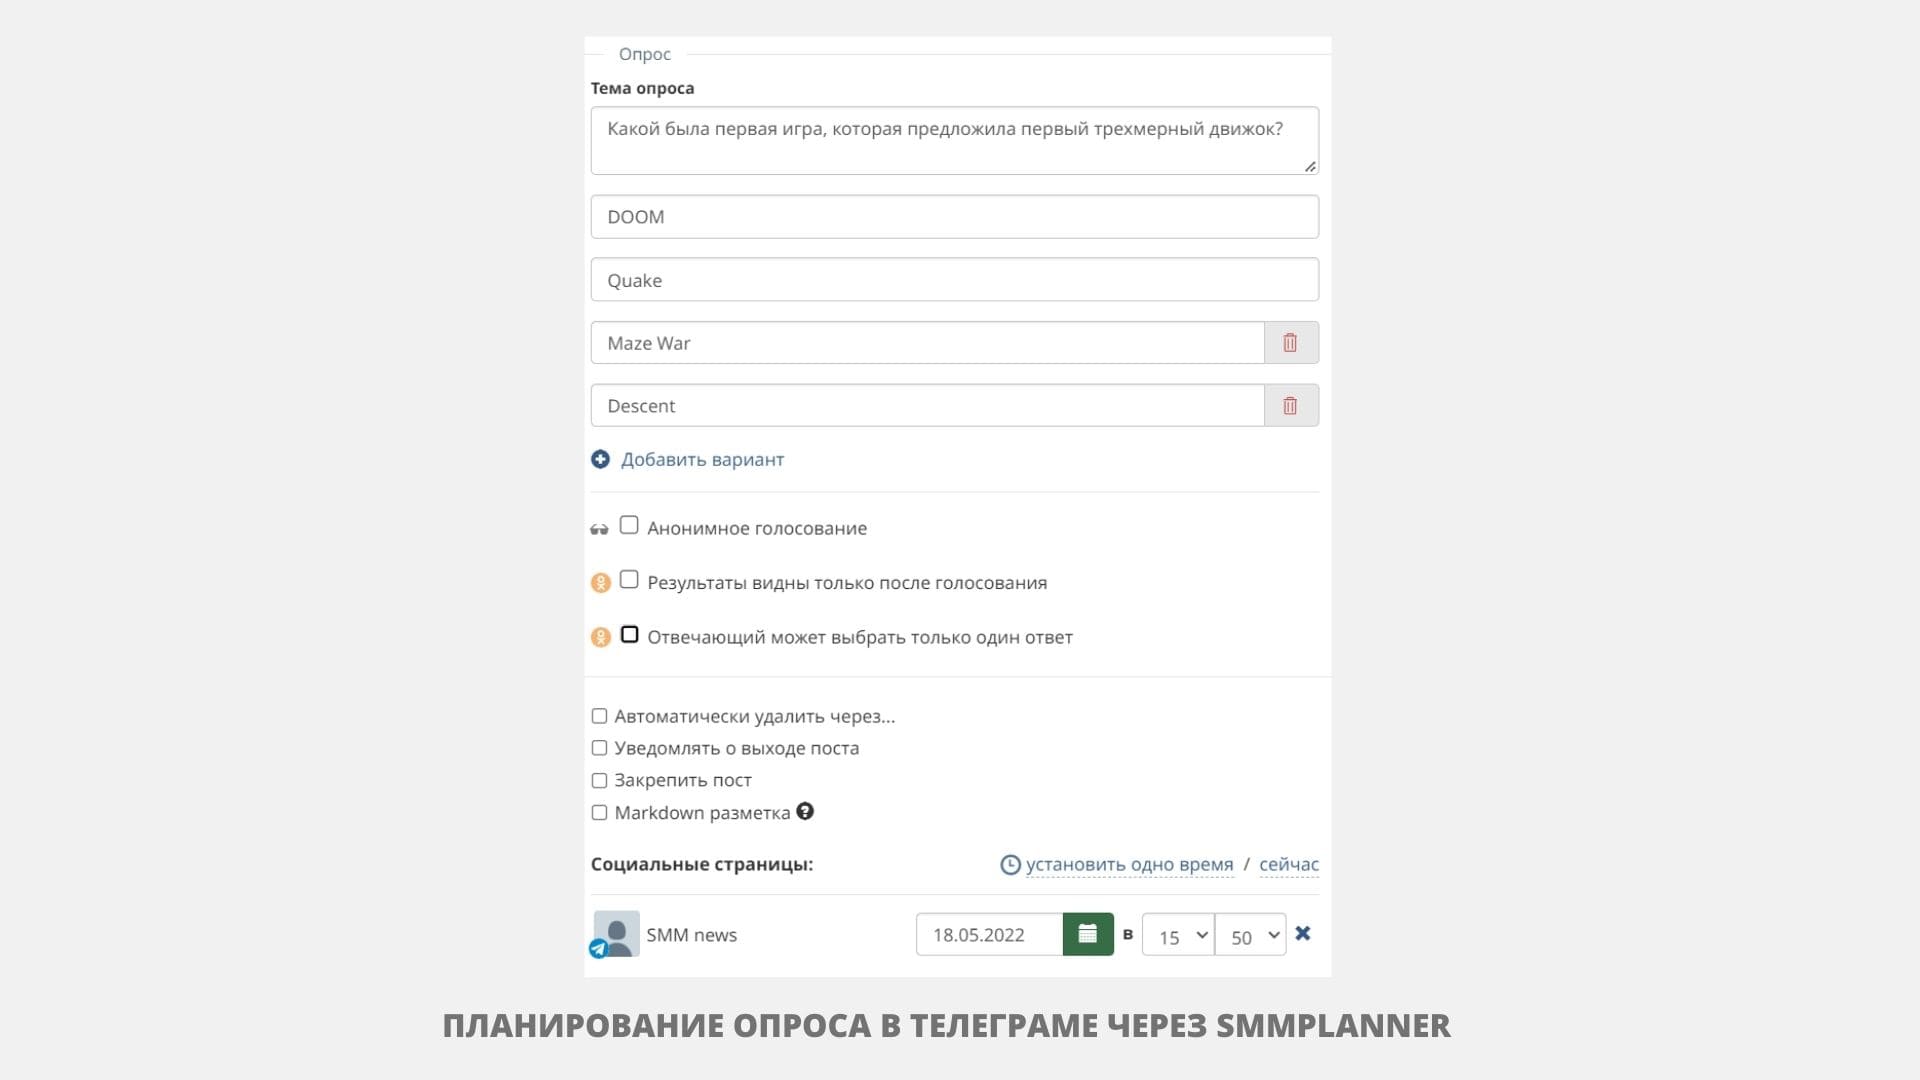 Опрос в Телеграме через SMMplanner